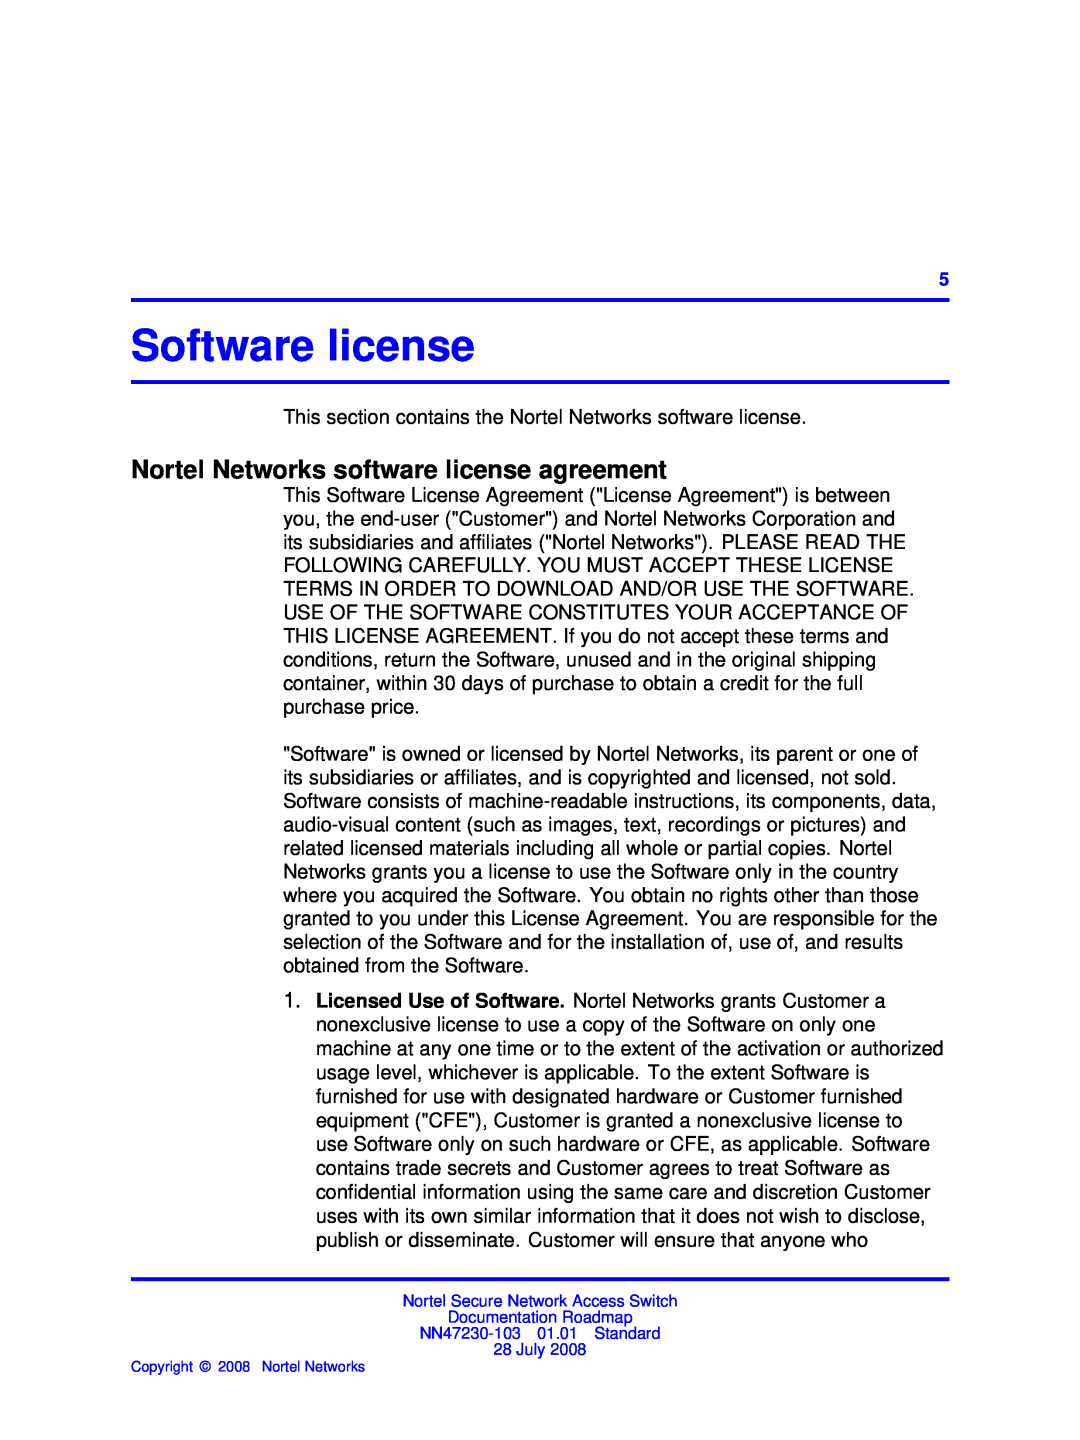 Nortel Networks NN47230-103 manual Software license, Nortel Networks software license agreement 